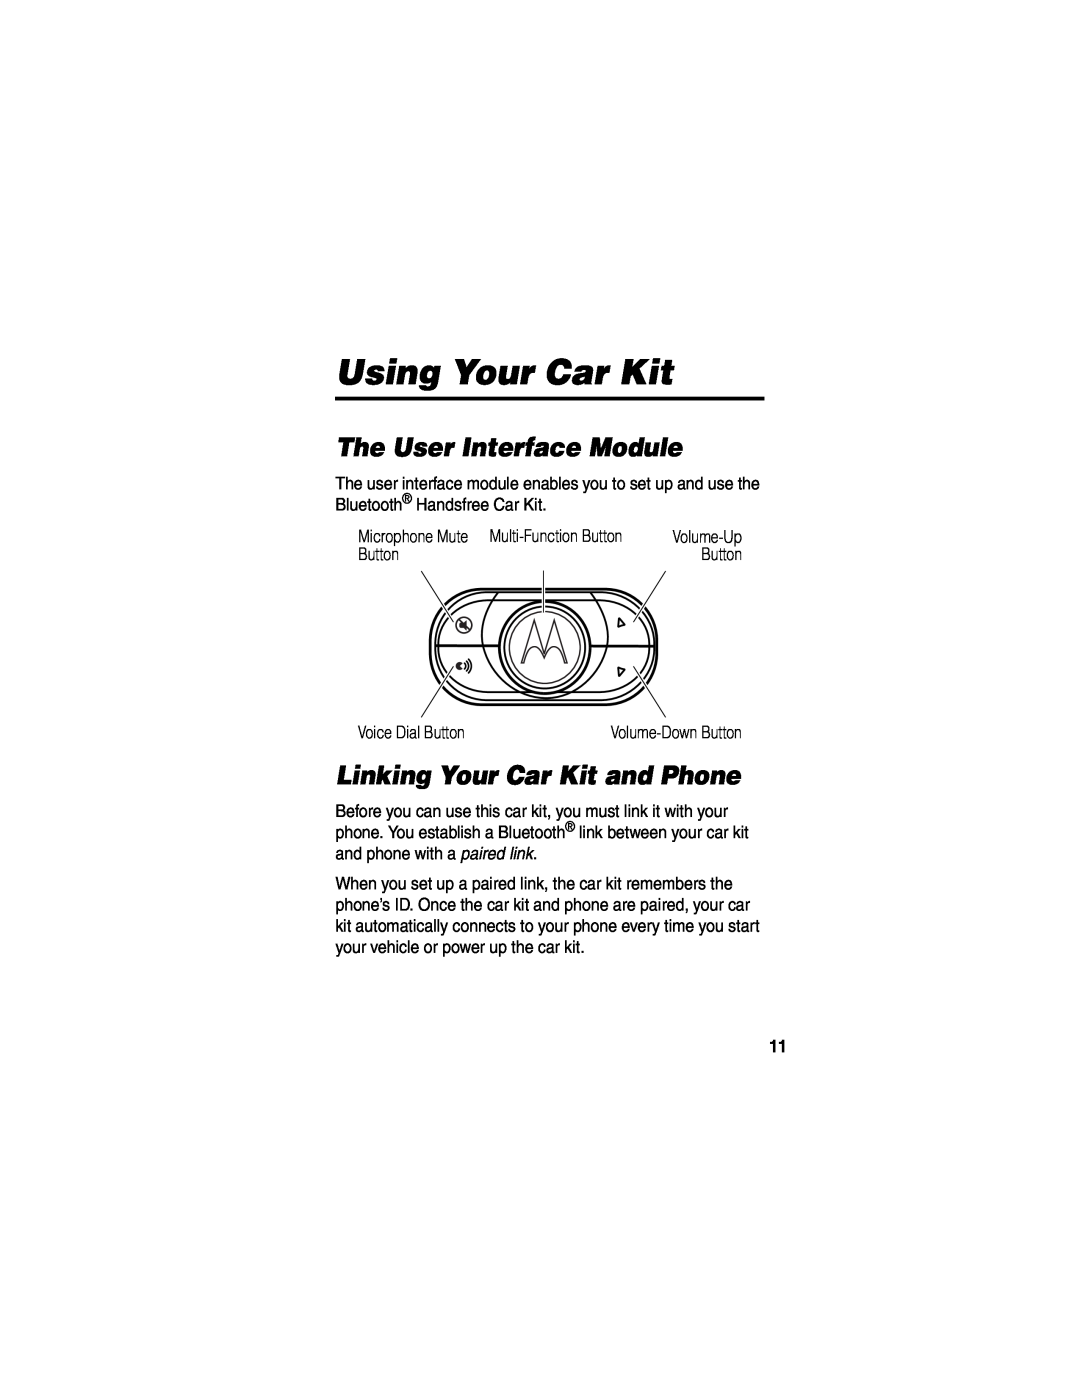 Motorola HF850 manual Using Your Car Kit, The User Interface Module, Linking Your Car Kit and Phone 